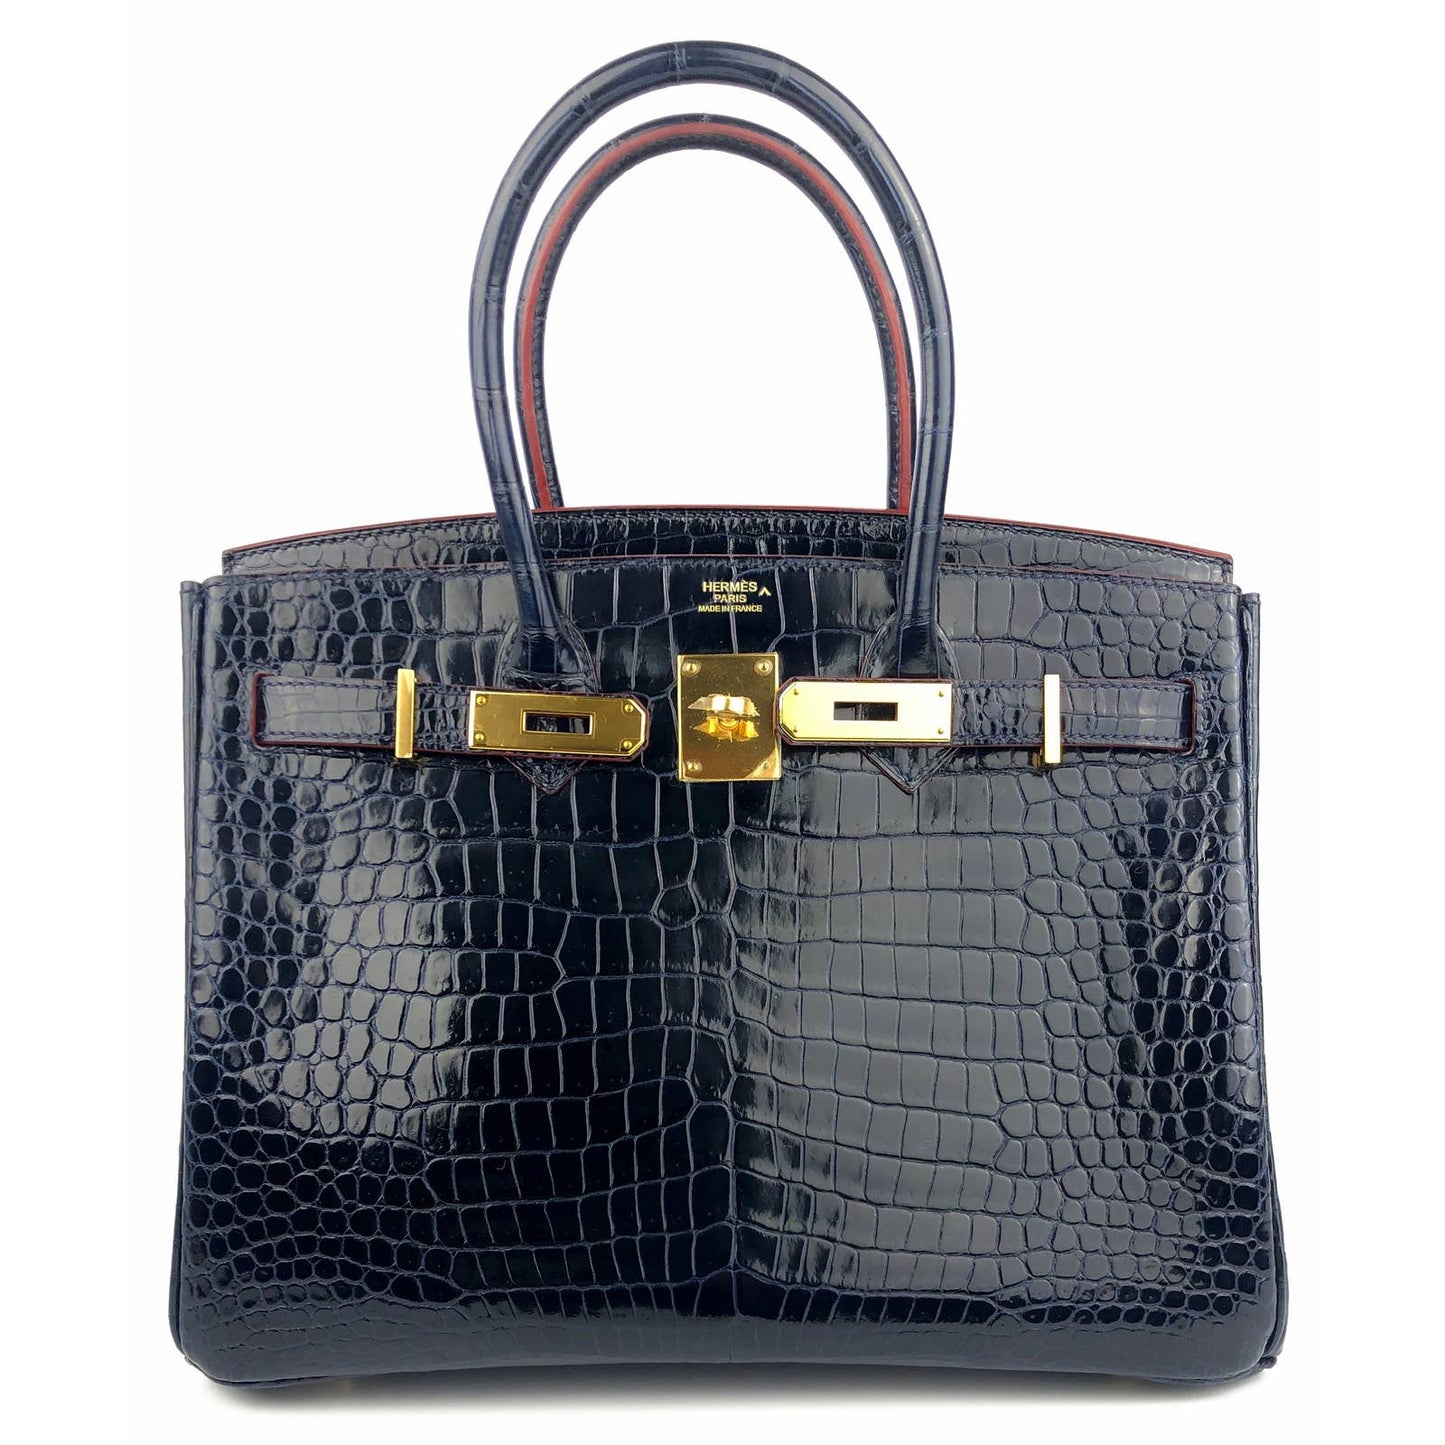 Hermes Hermès Birkin 30 Burgundy Leather Handbag ()